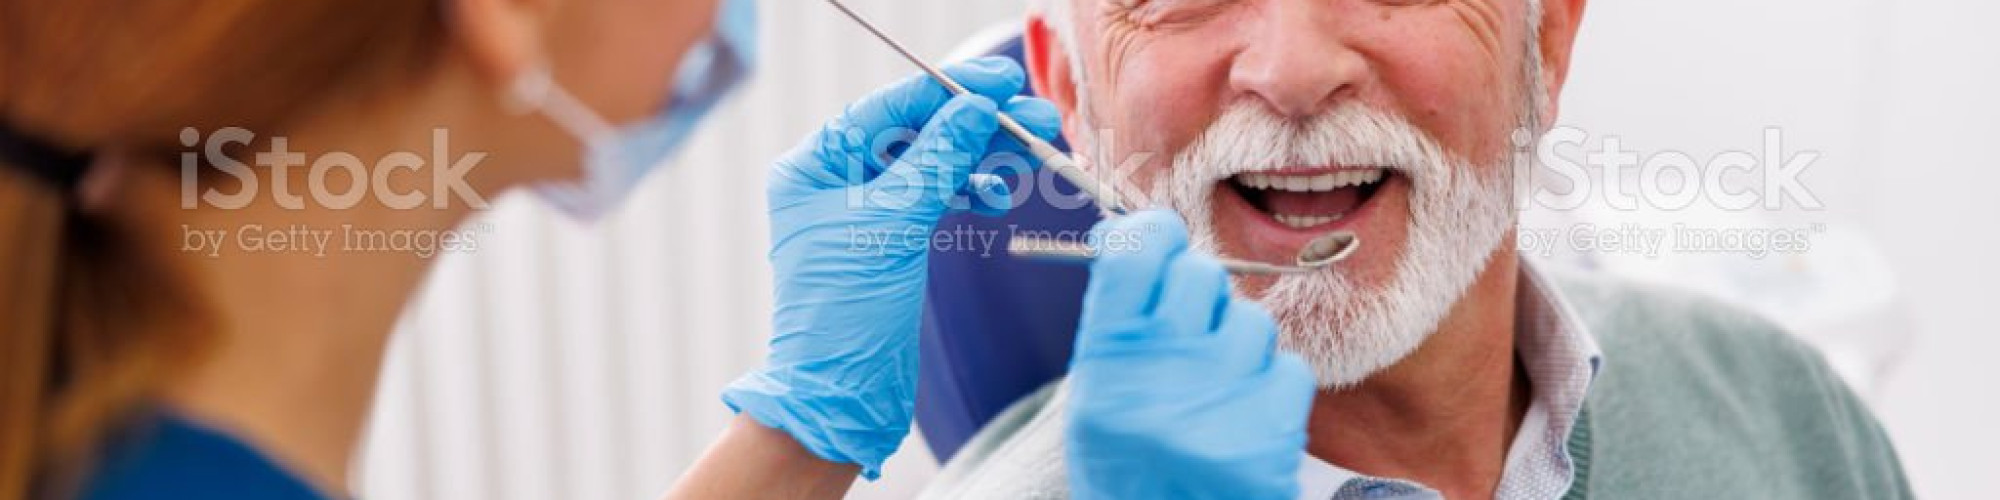 Roseneath Dental Care